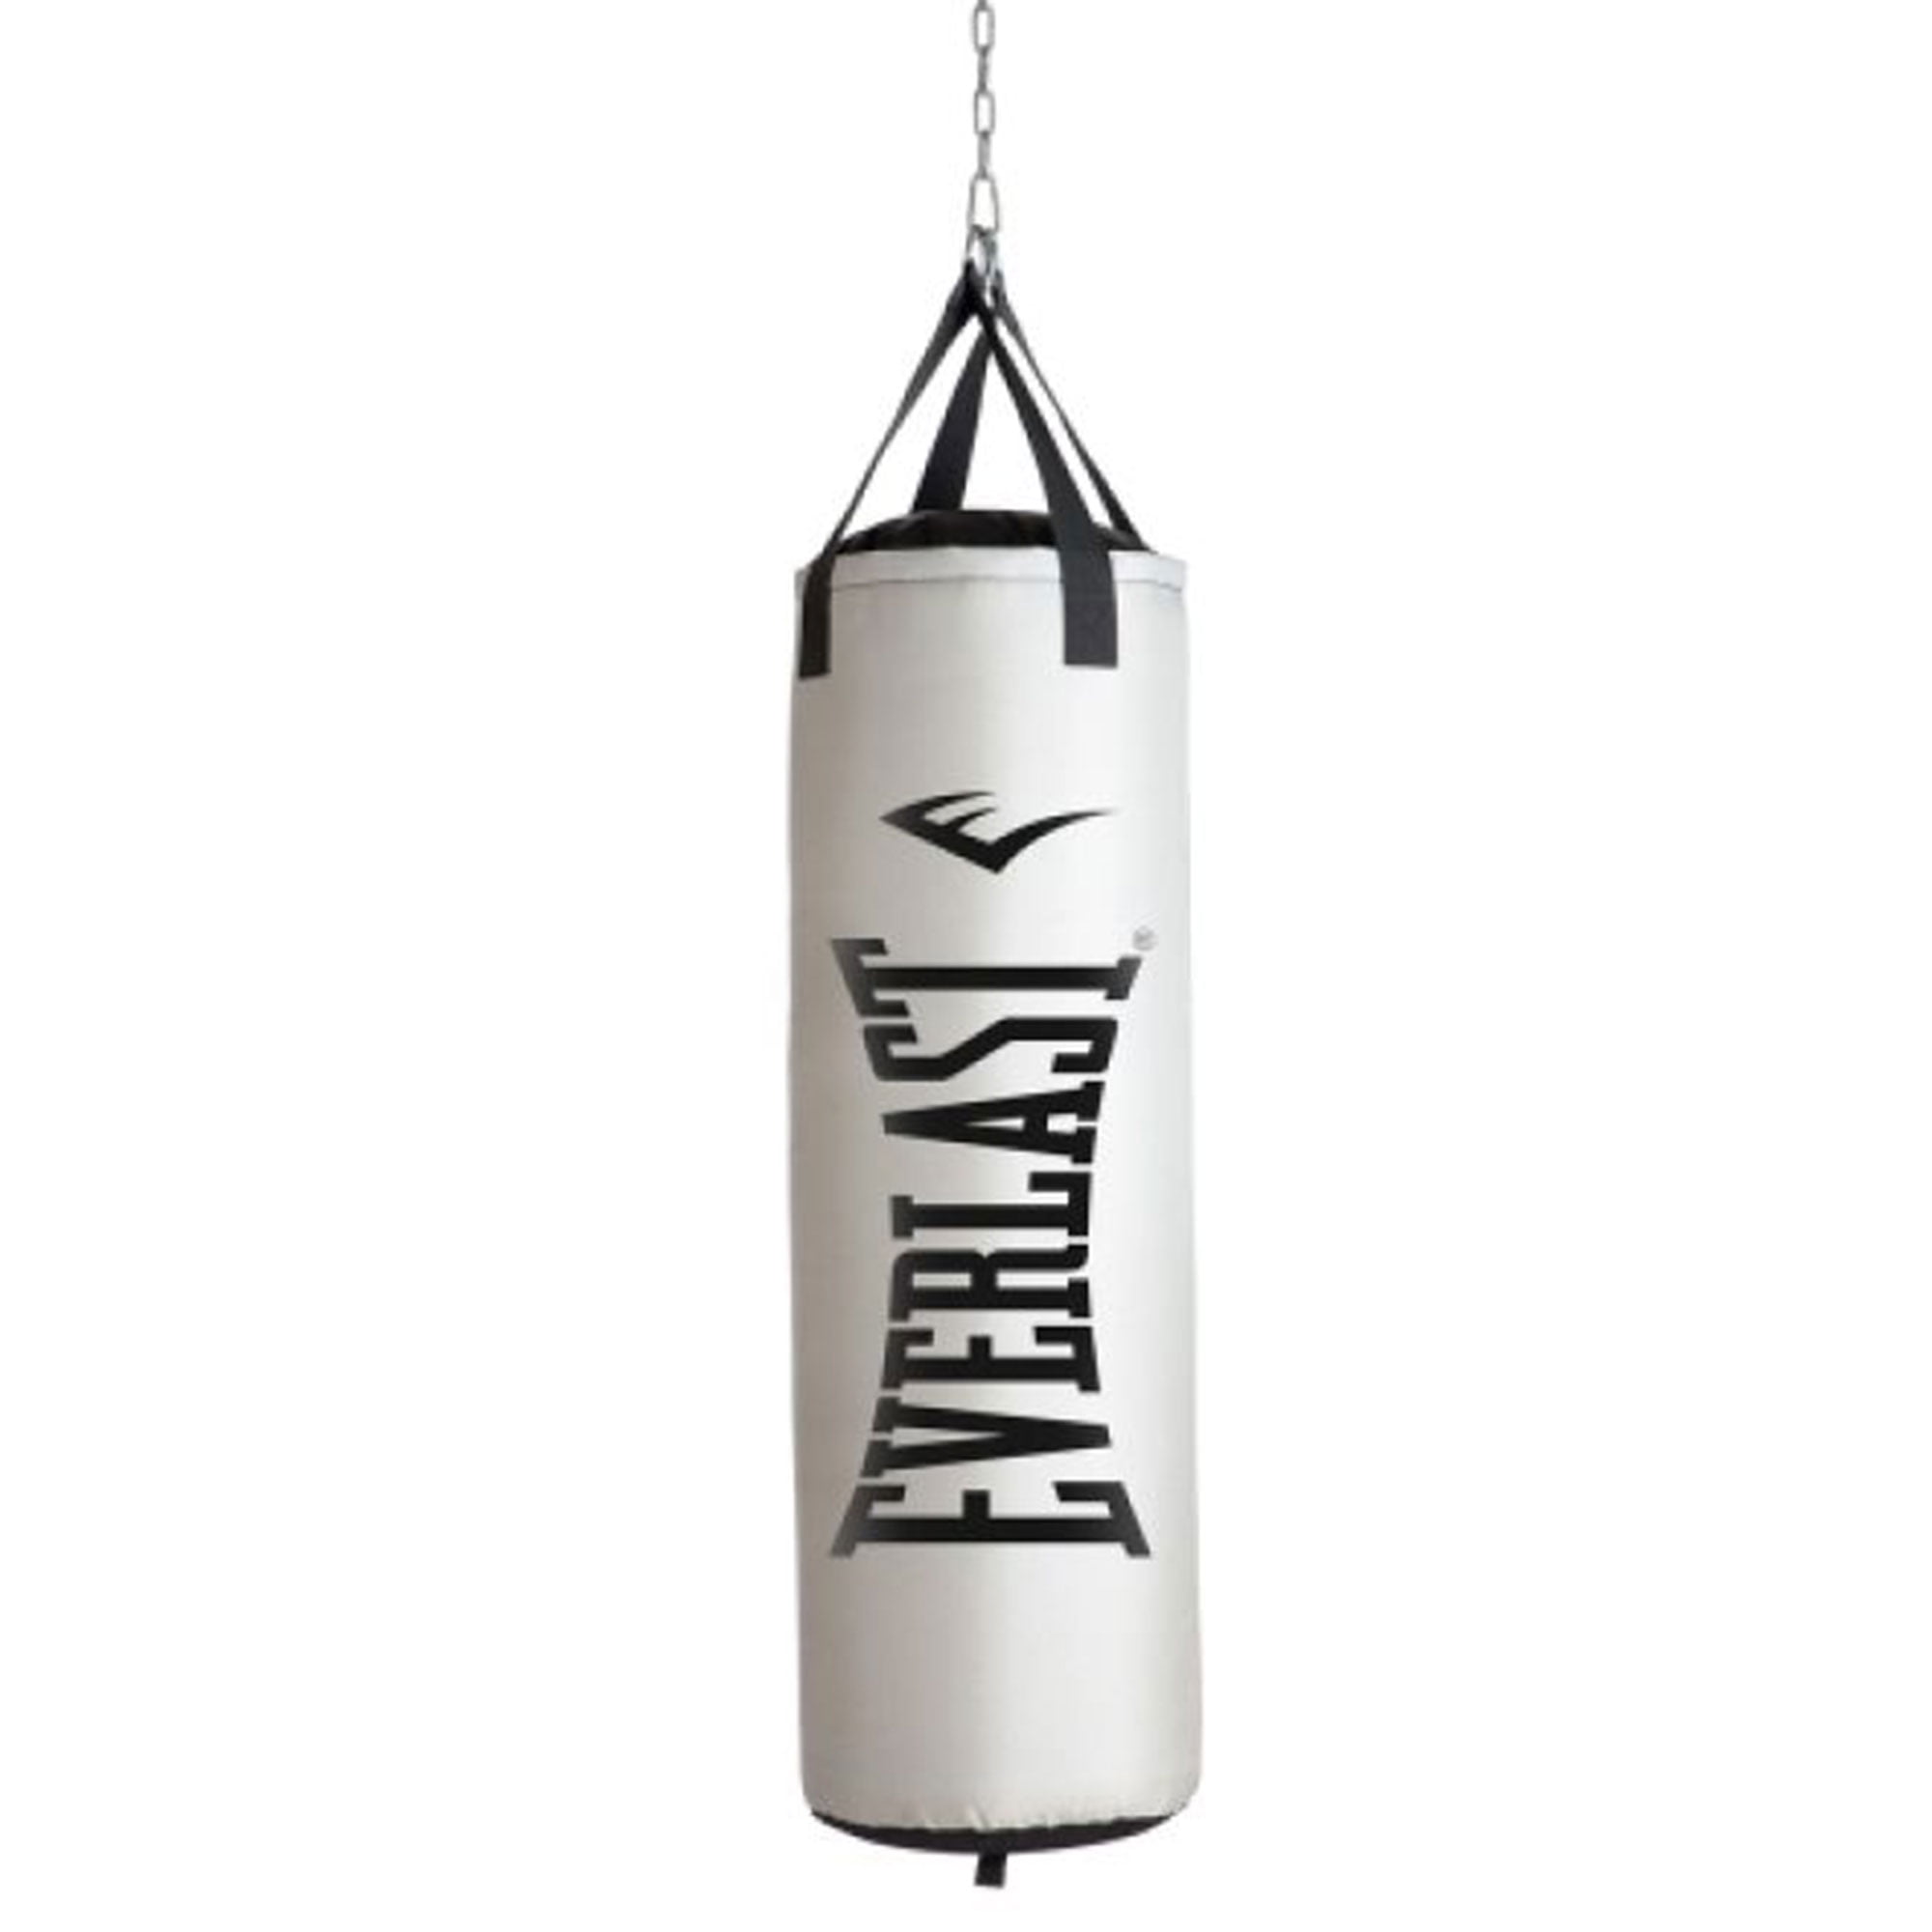 Fitness Workout Nevatear 60 Pound Heavy Boxing Punching Bag Platinum 